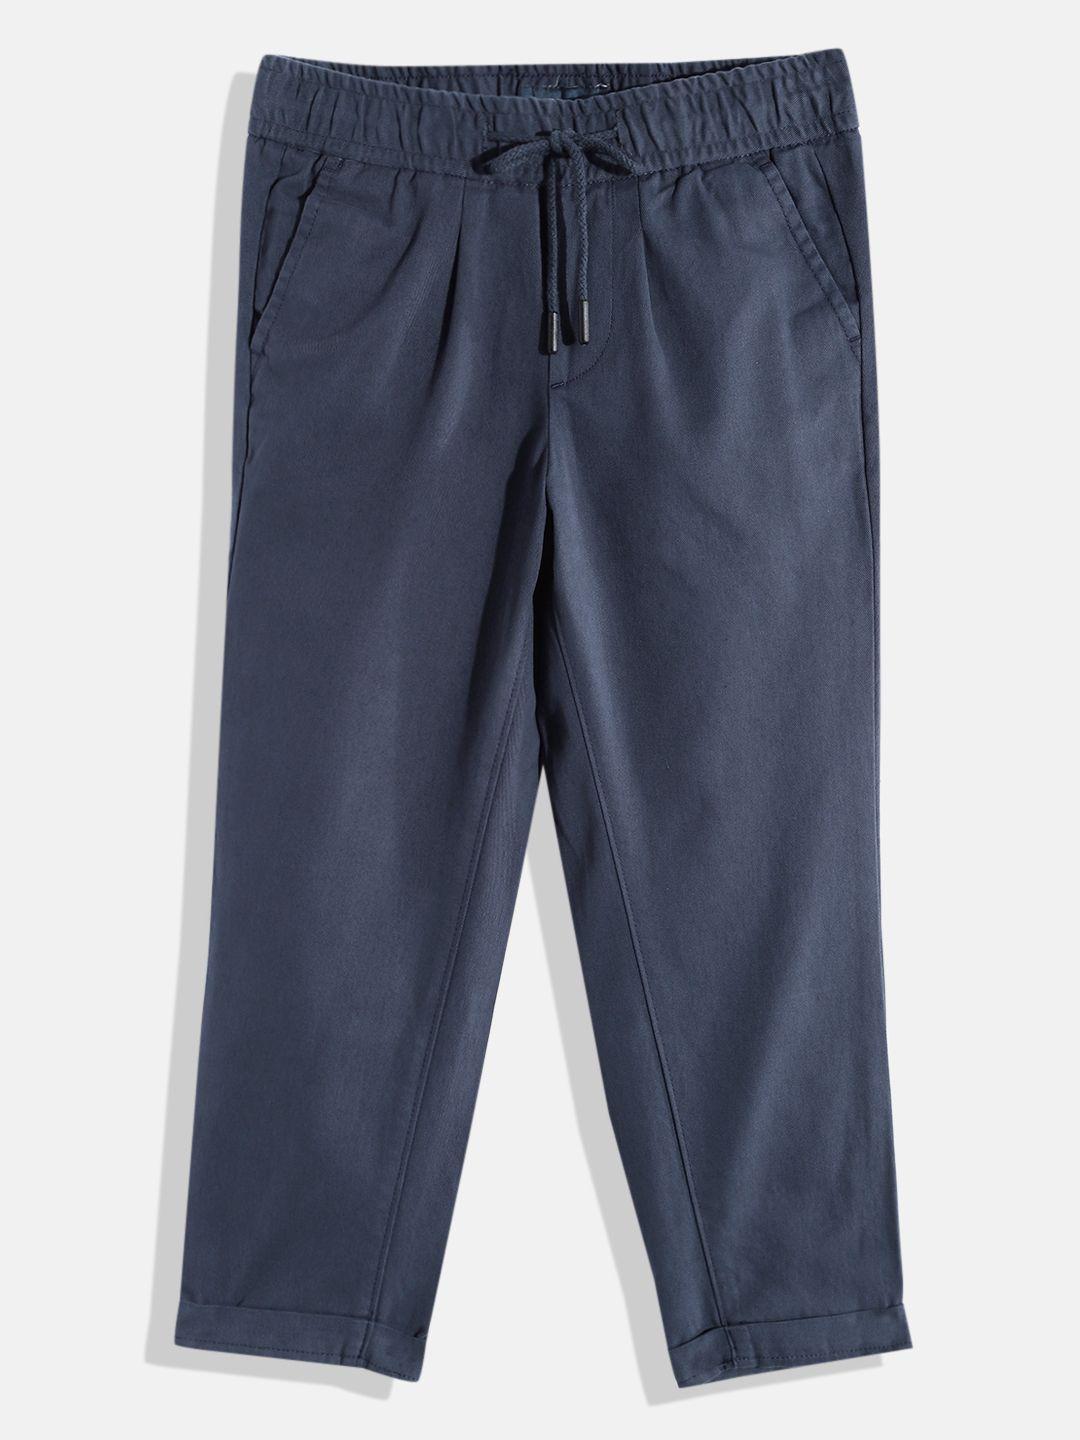 m&h juniors boys navy blue pure cotton solid trousers